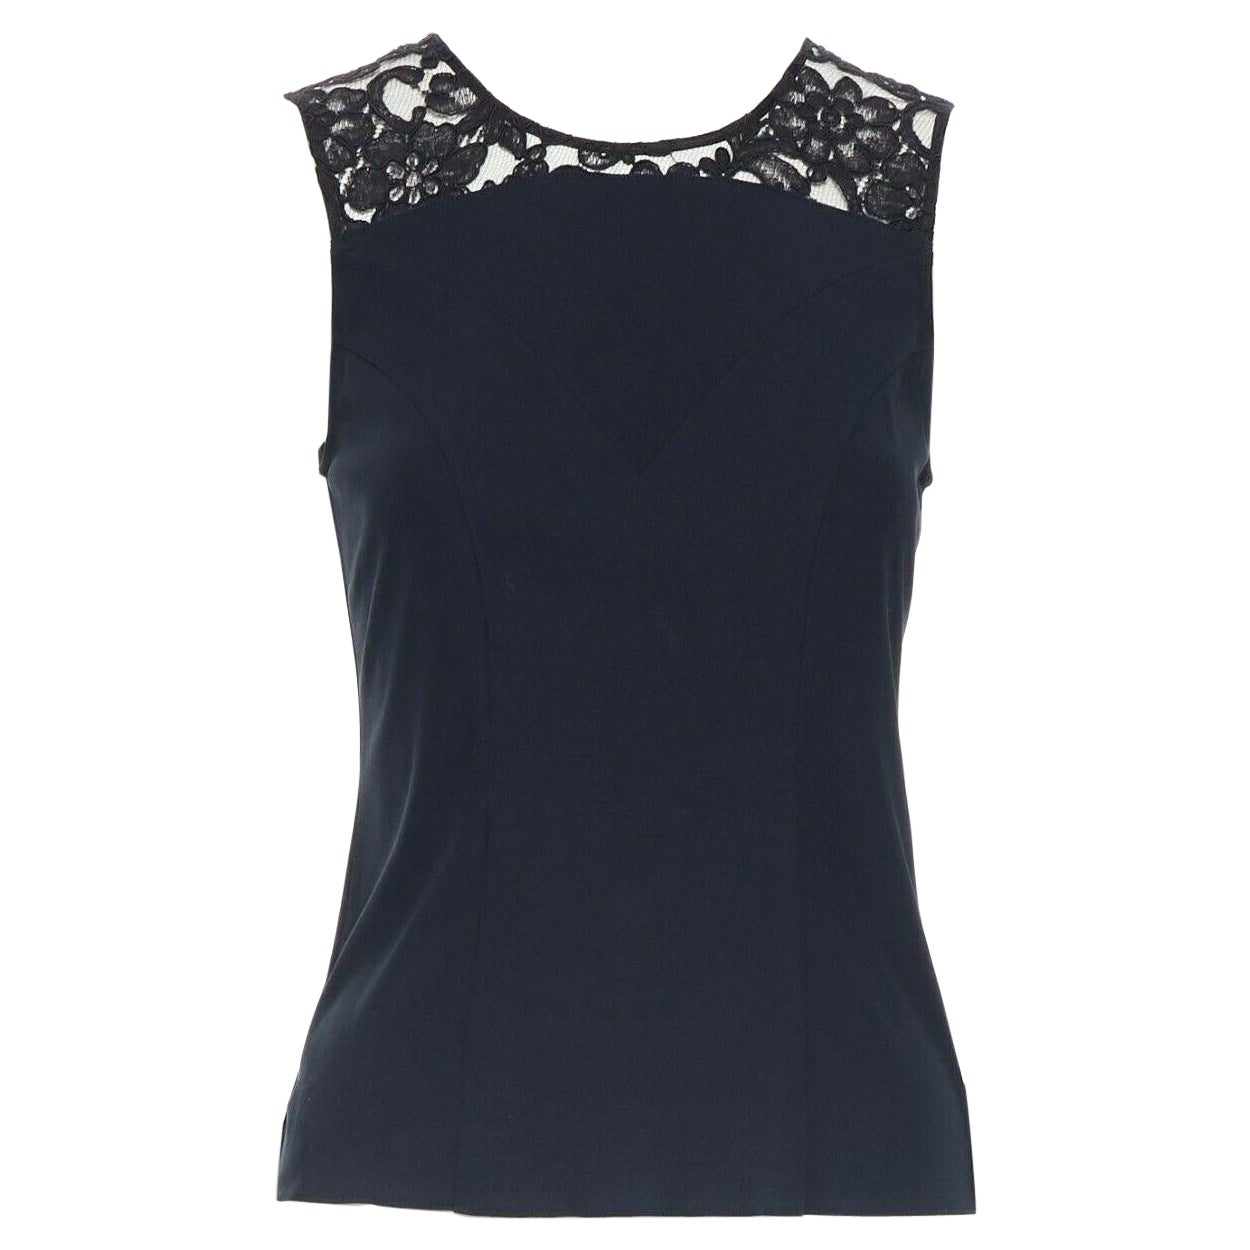 CHANEL navy blue 100% cotton illusion neckline black lace sleeveless top FR36